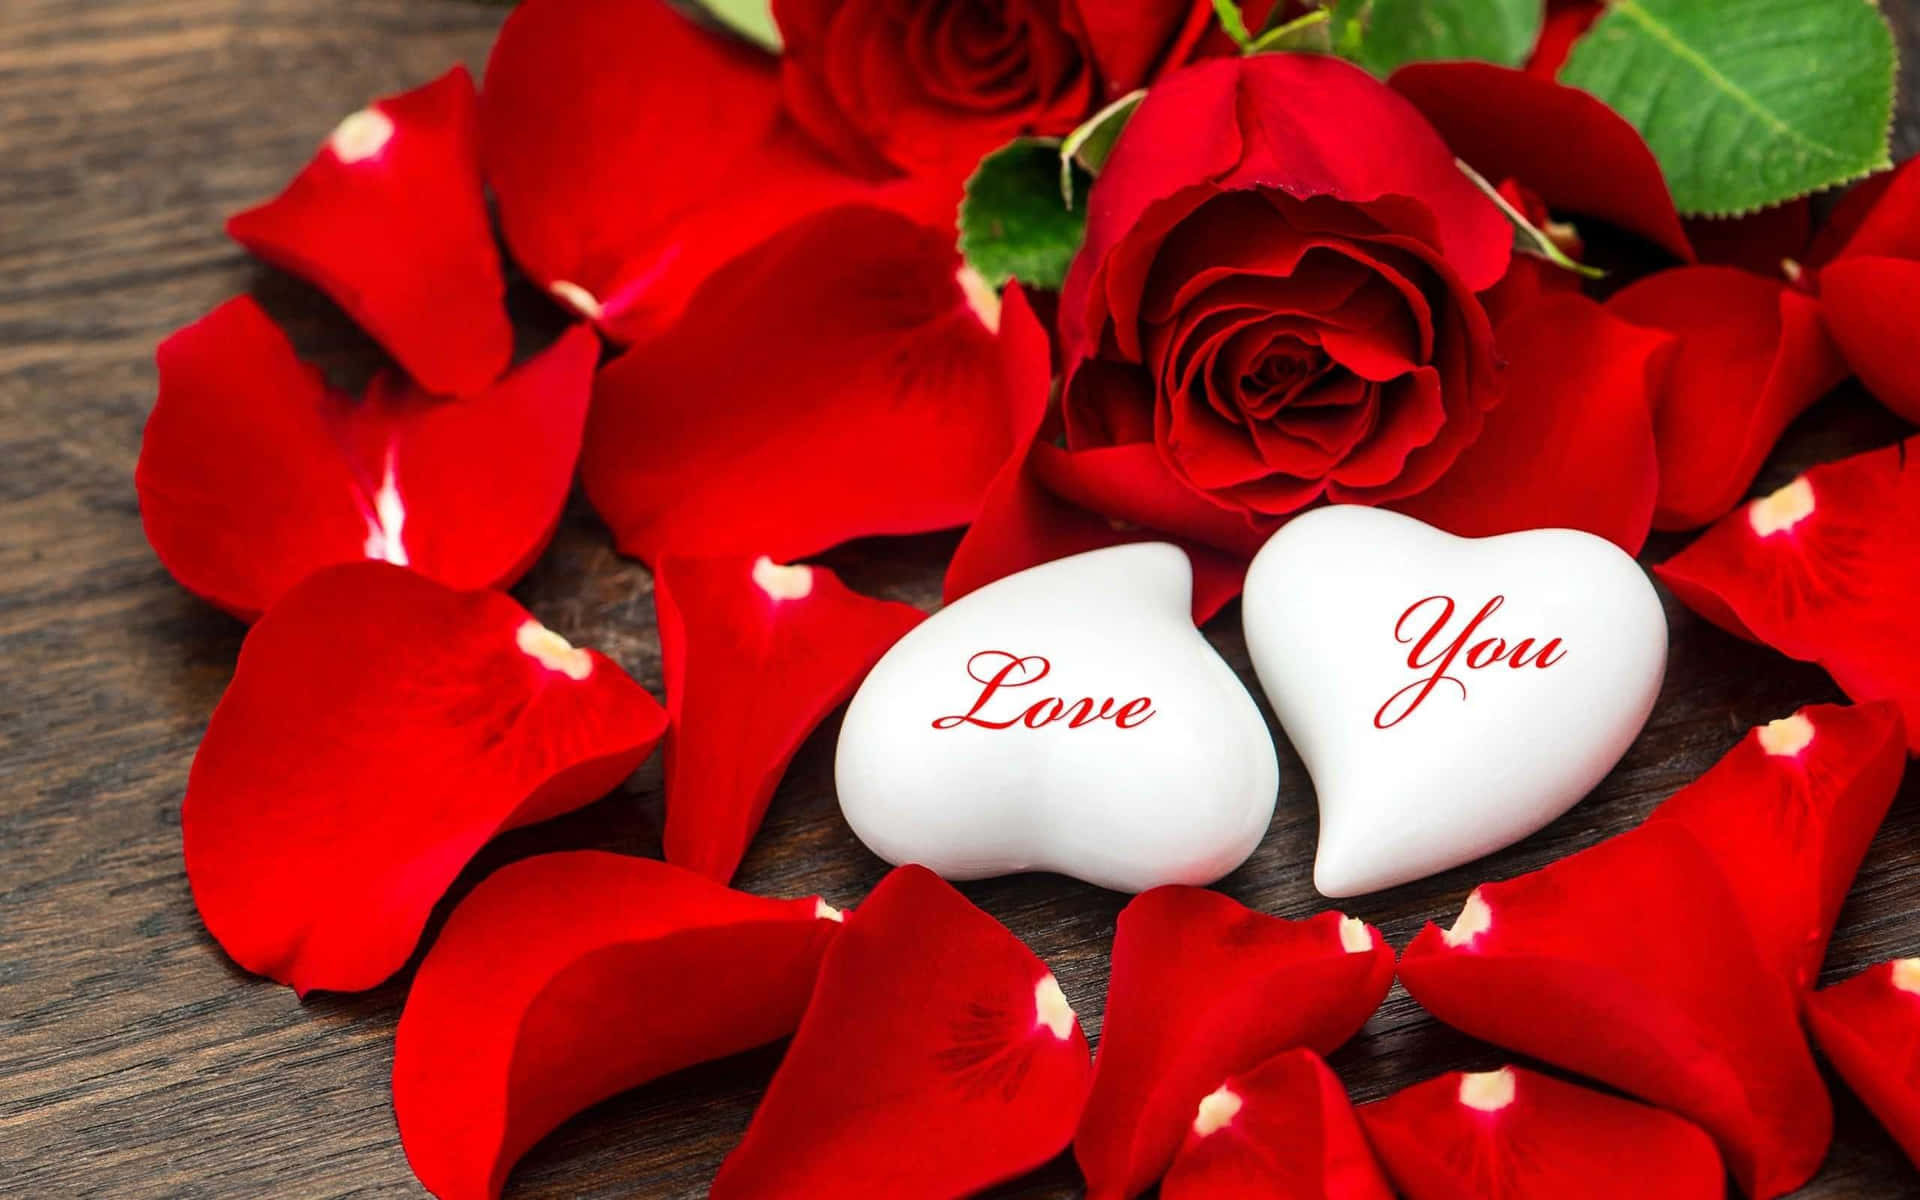 Beautiful Love Rose Flower Images | Best Flower Site